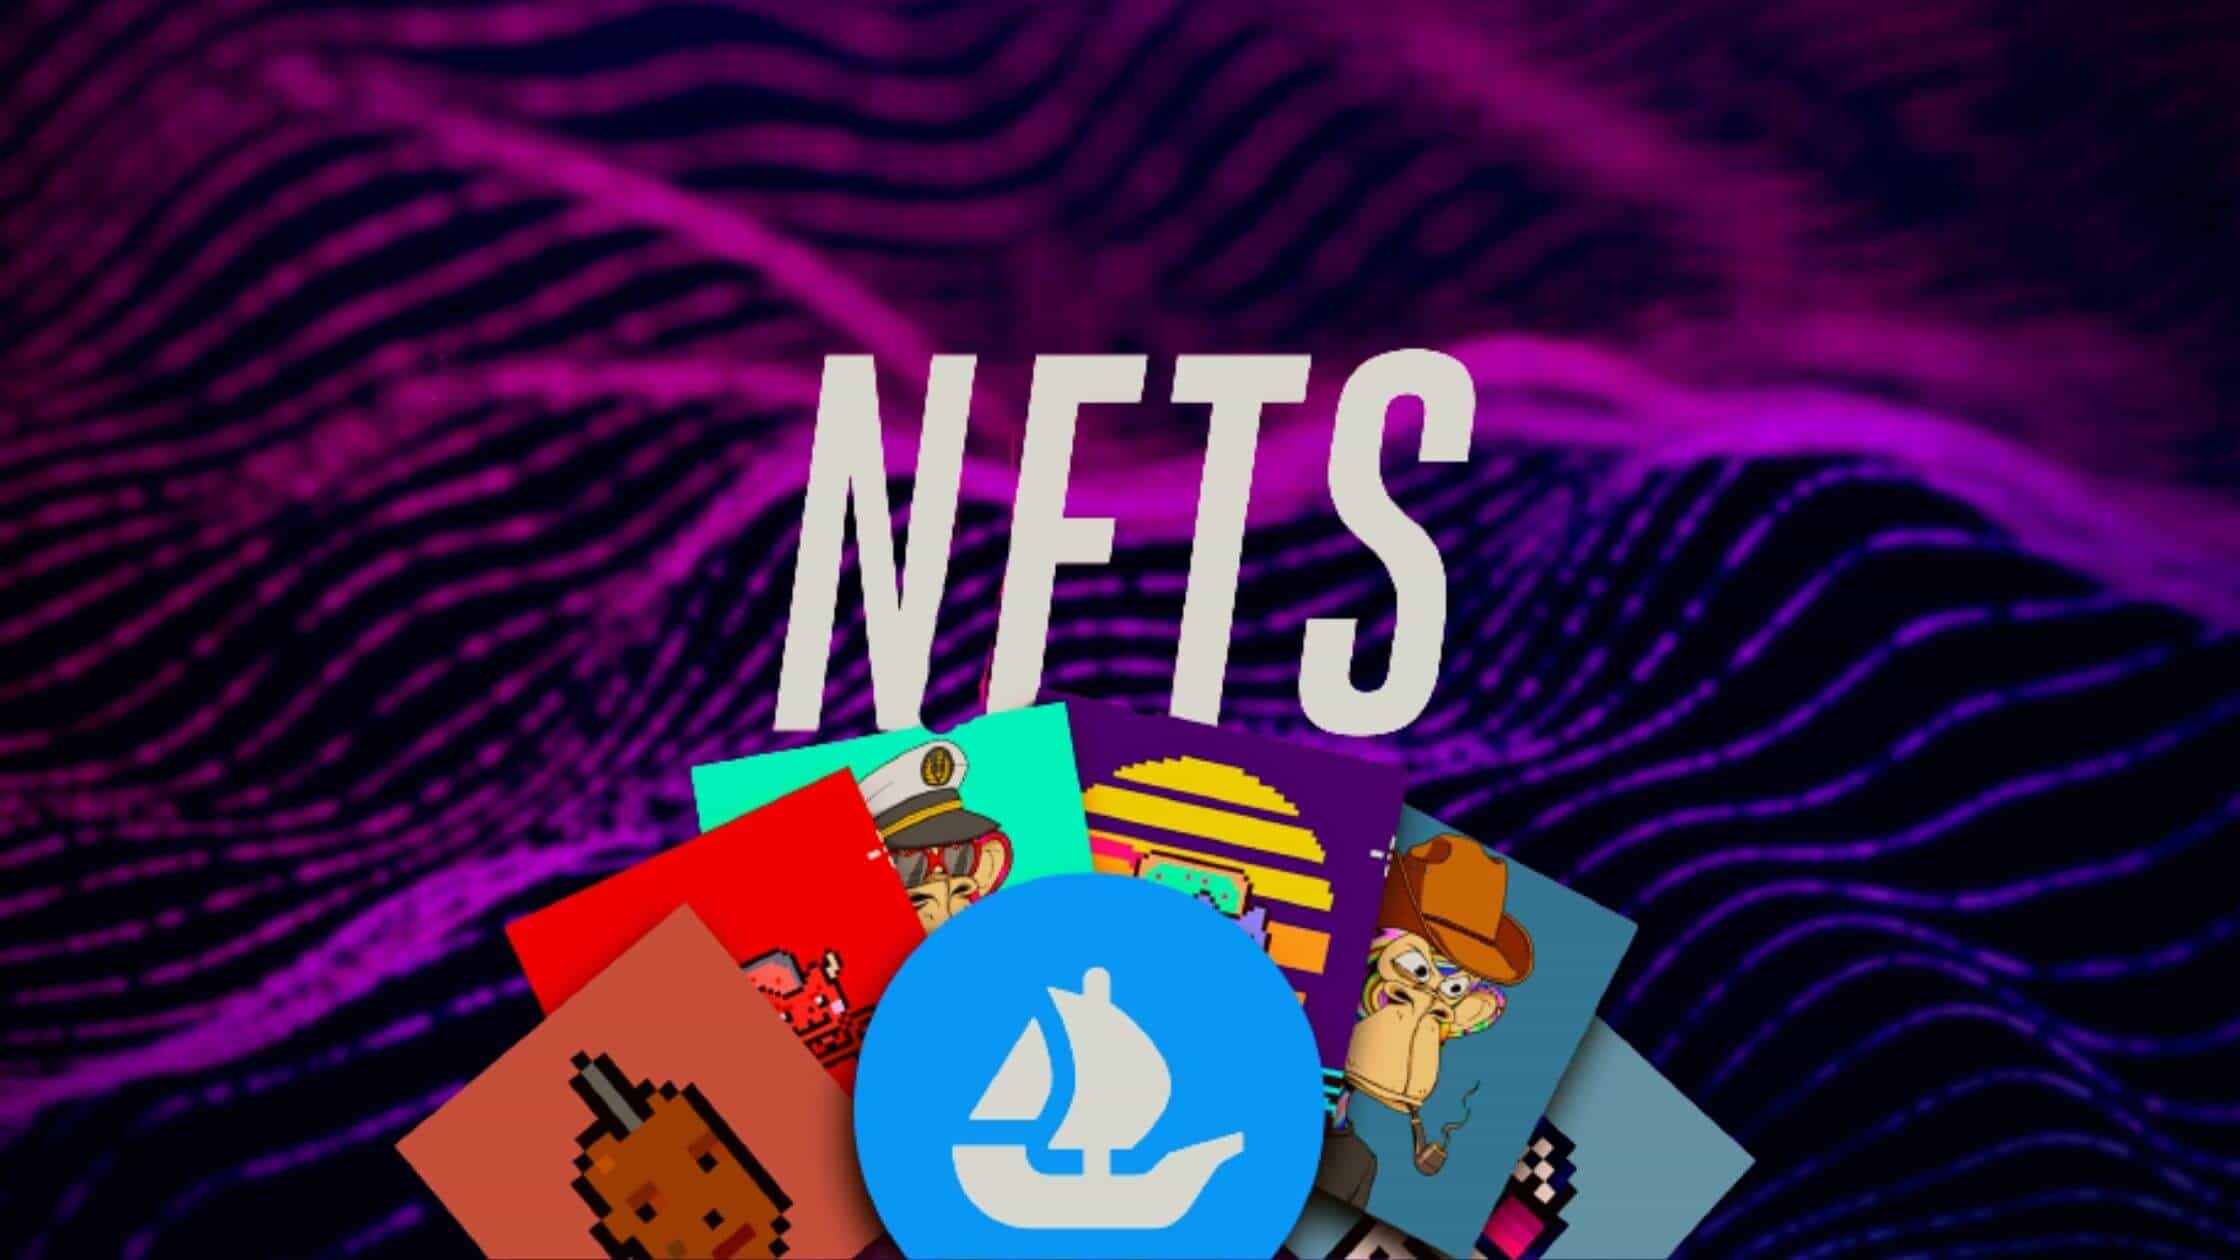 About NFTs